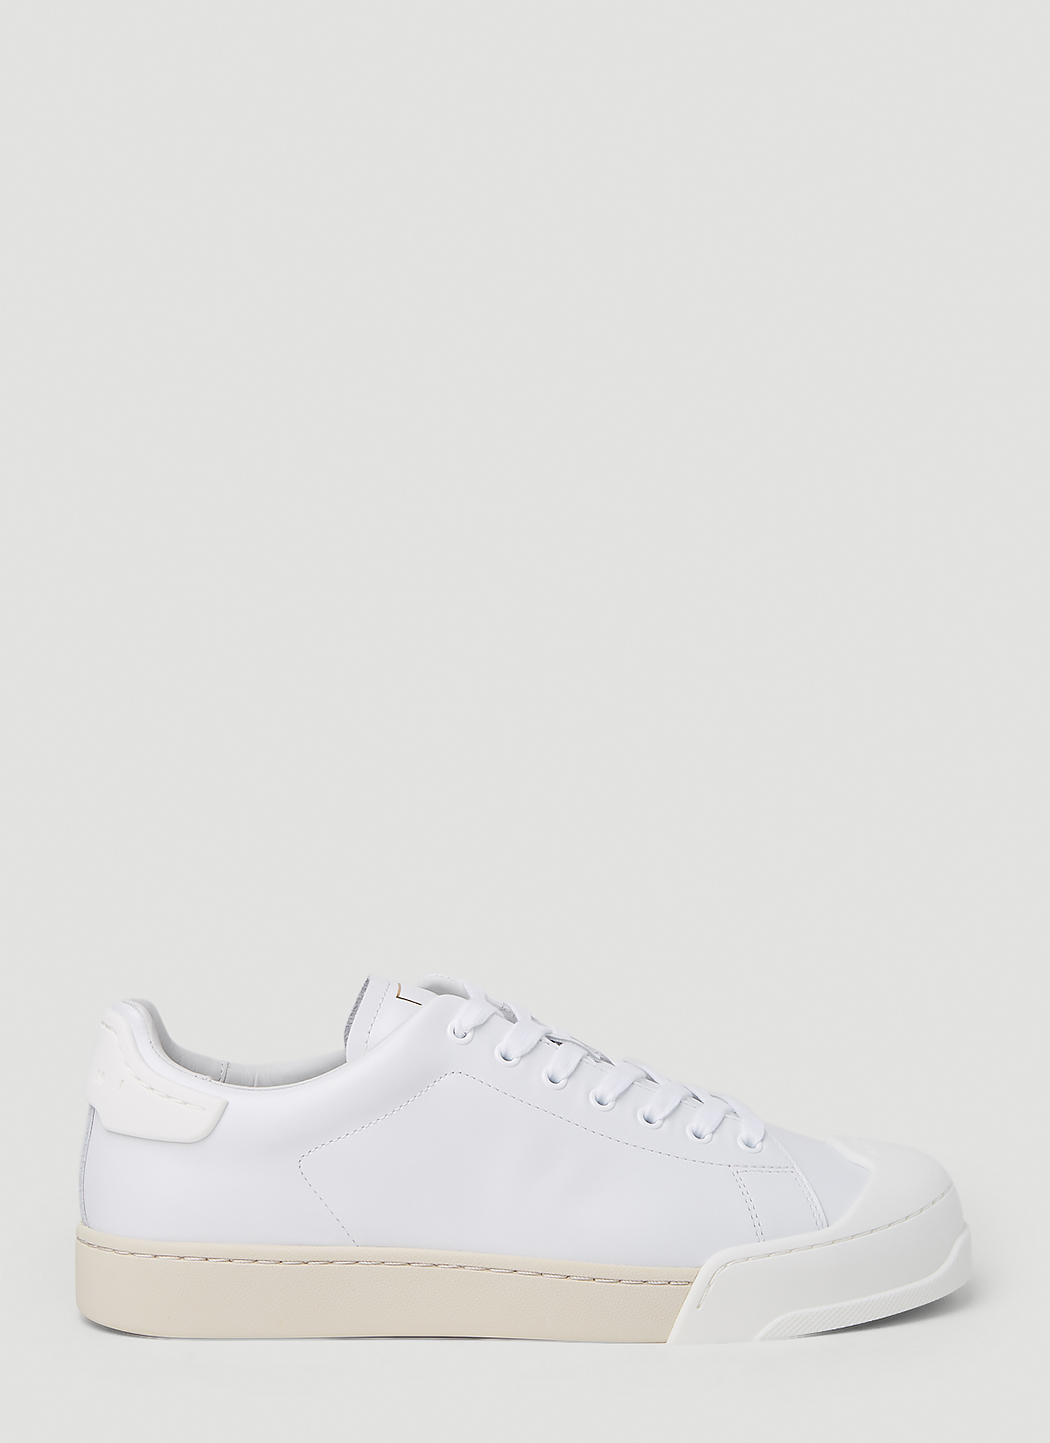 Marni Dada Bumper Sneakers in White | LN-CC®